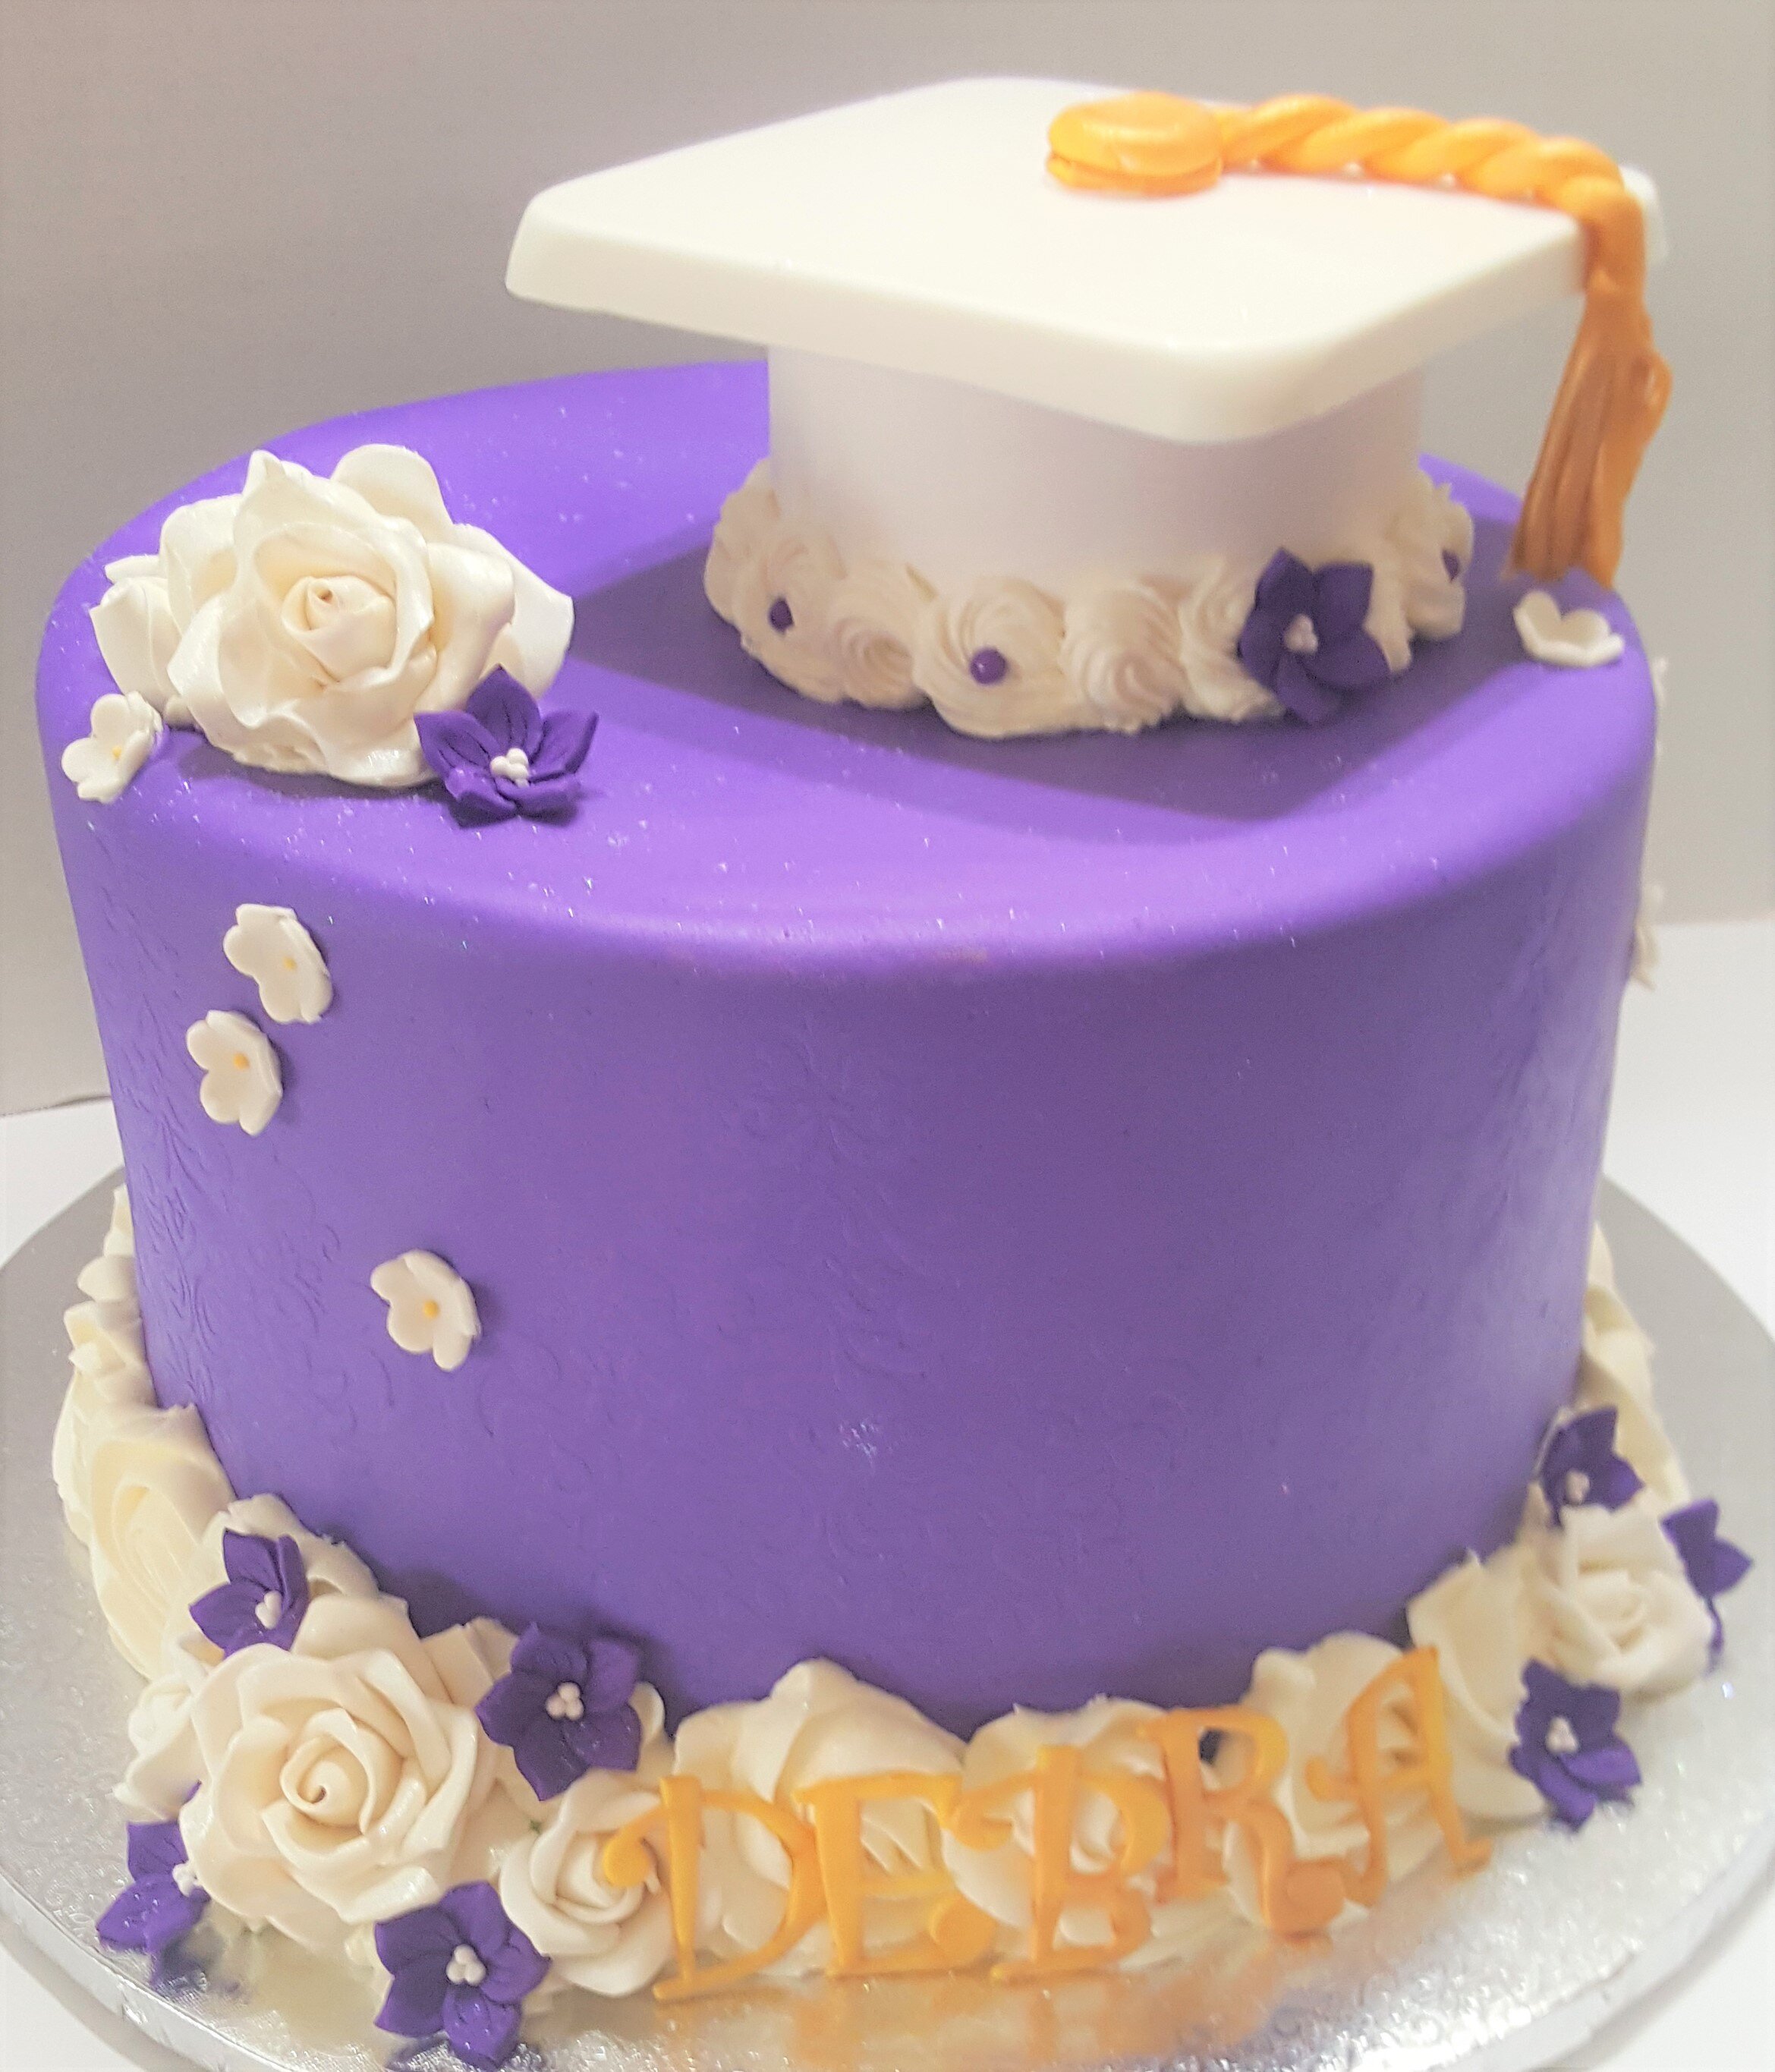 Chicago_Bakery-Cake-Graduation-Purple.jpg